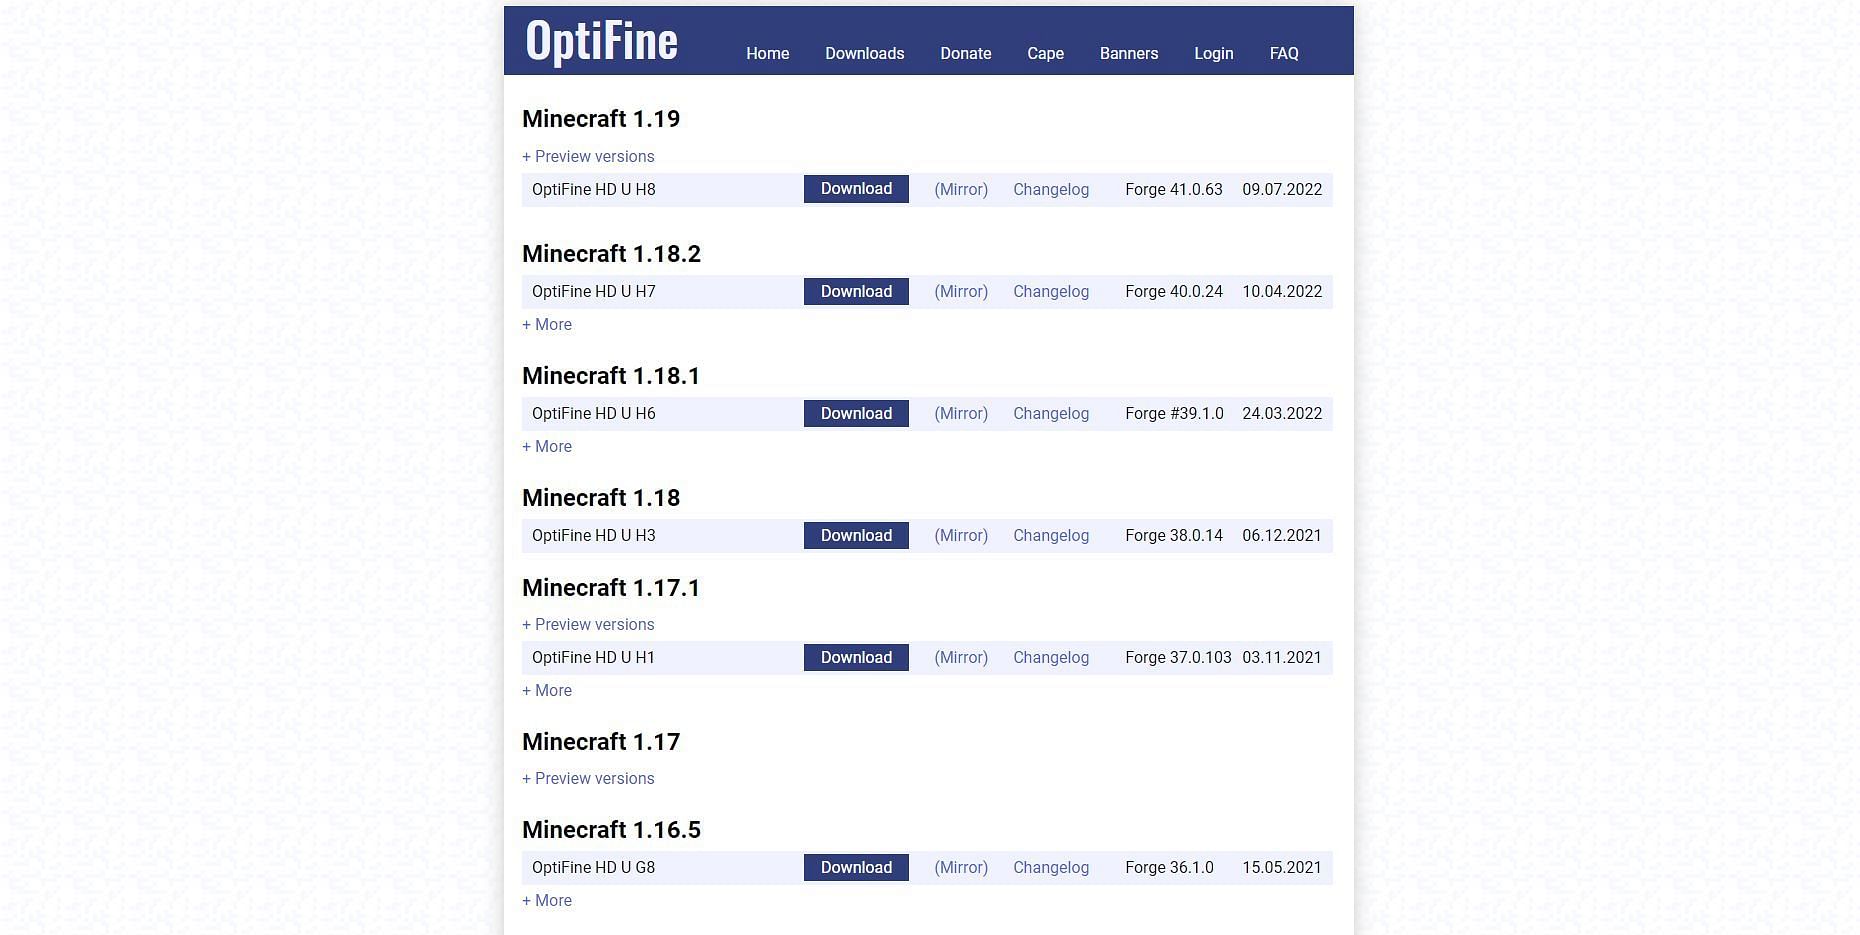 The OptiFine version download list (Image via optifine.net)